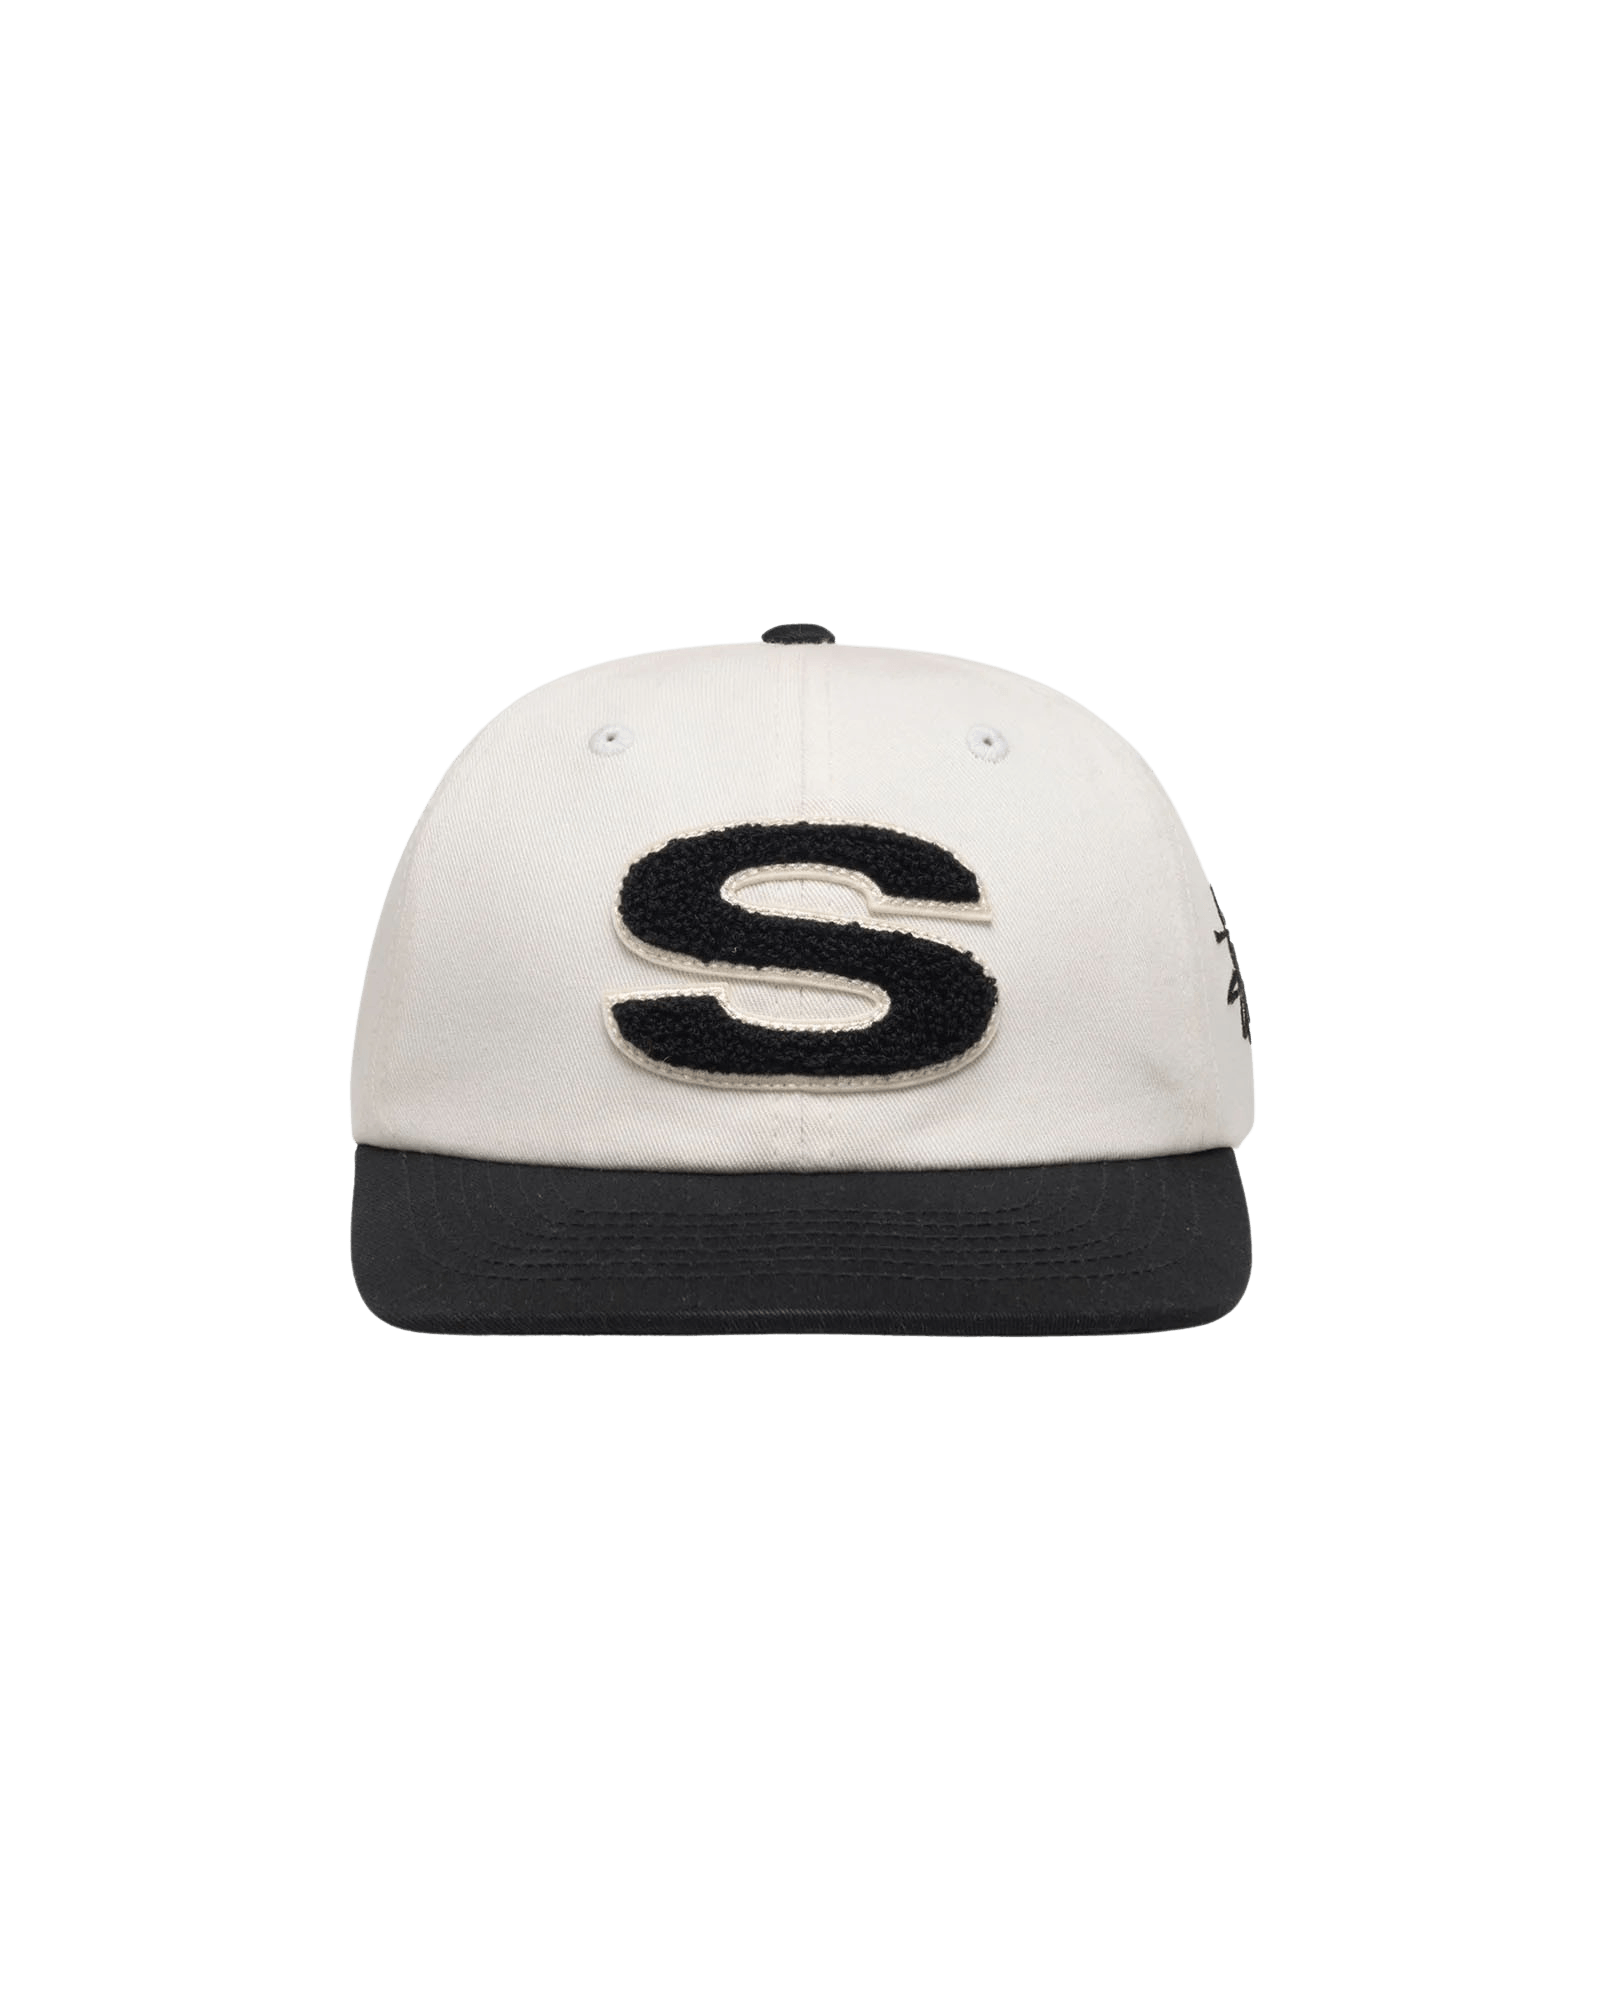 Chenille S Low Pro Cap $64 Stüssy Headwear Caps White